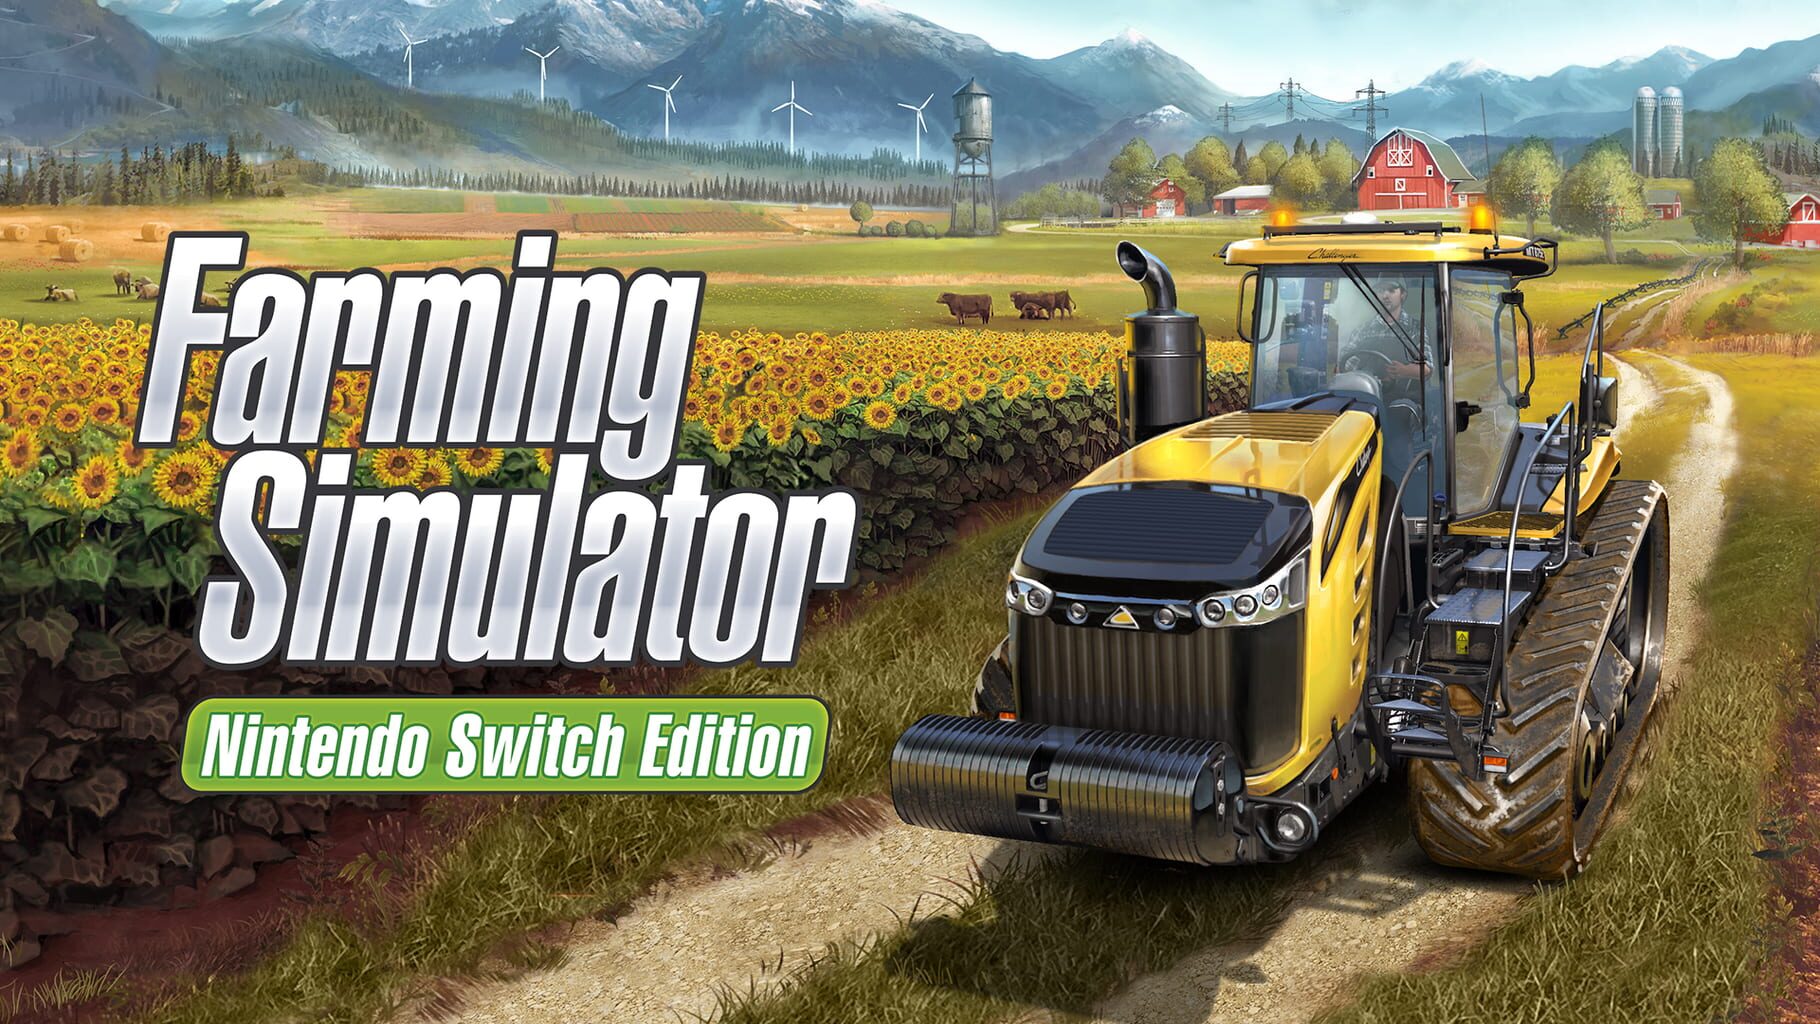 Farming Simulator: Nintendo Switch Edition artwork